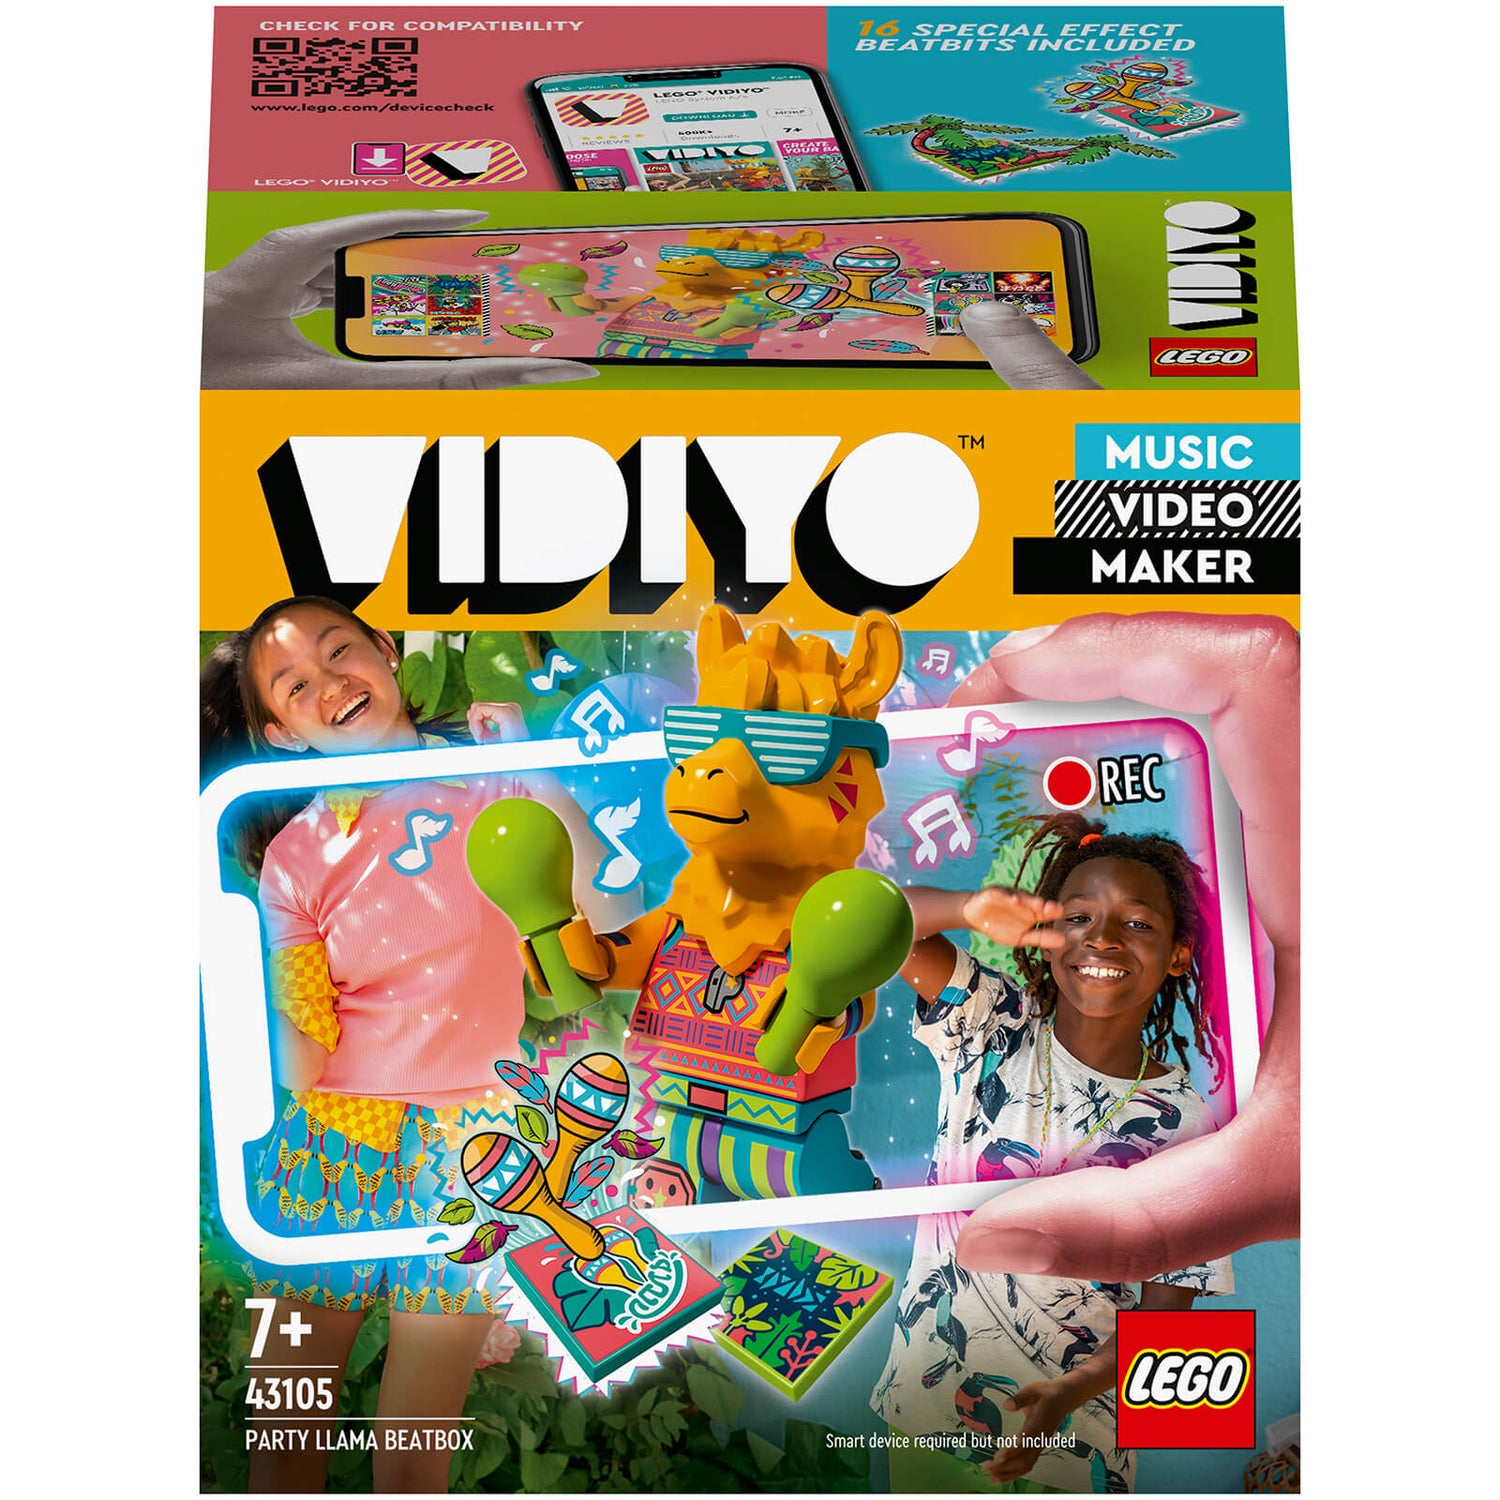 LEGO VIDIYO Party Llama BeatBox Music Video Maker Toy (43105)